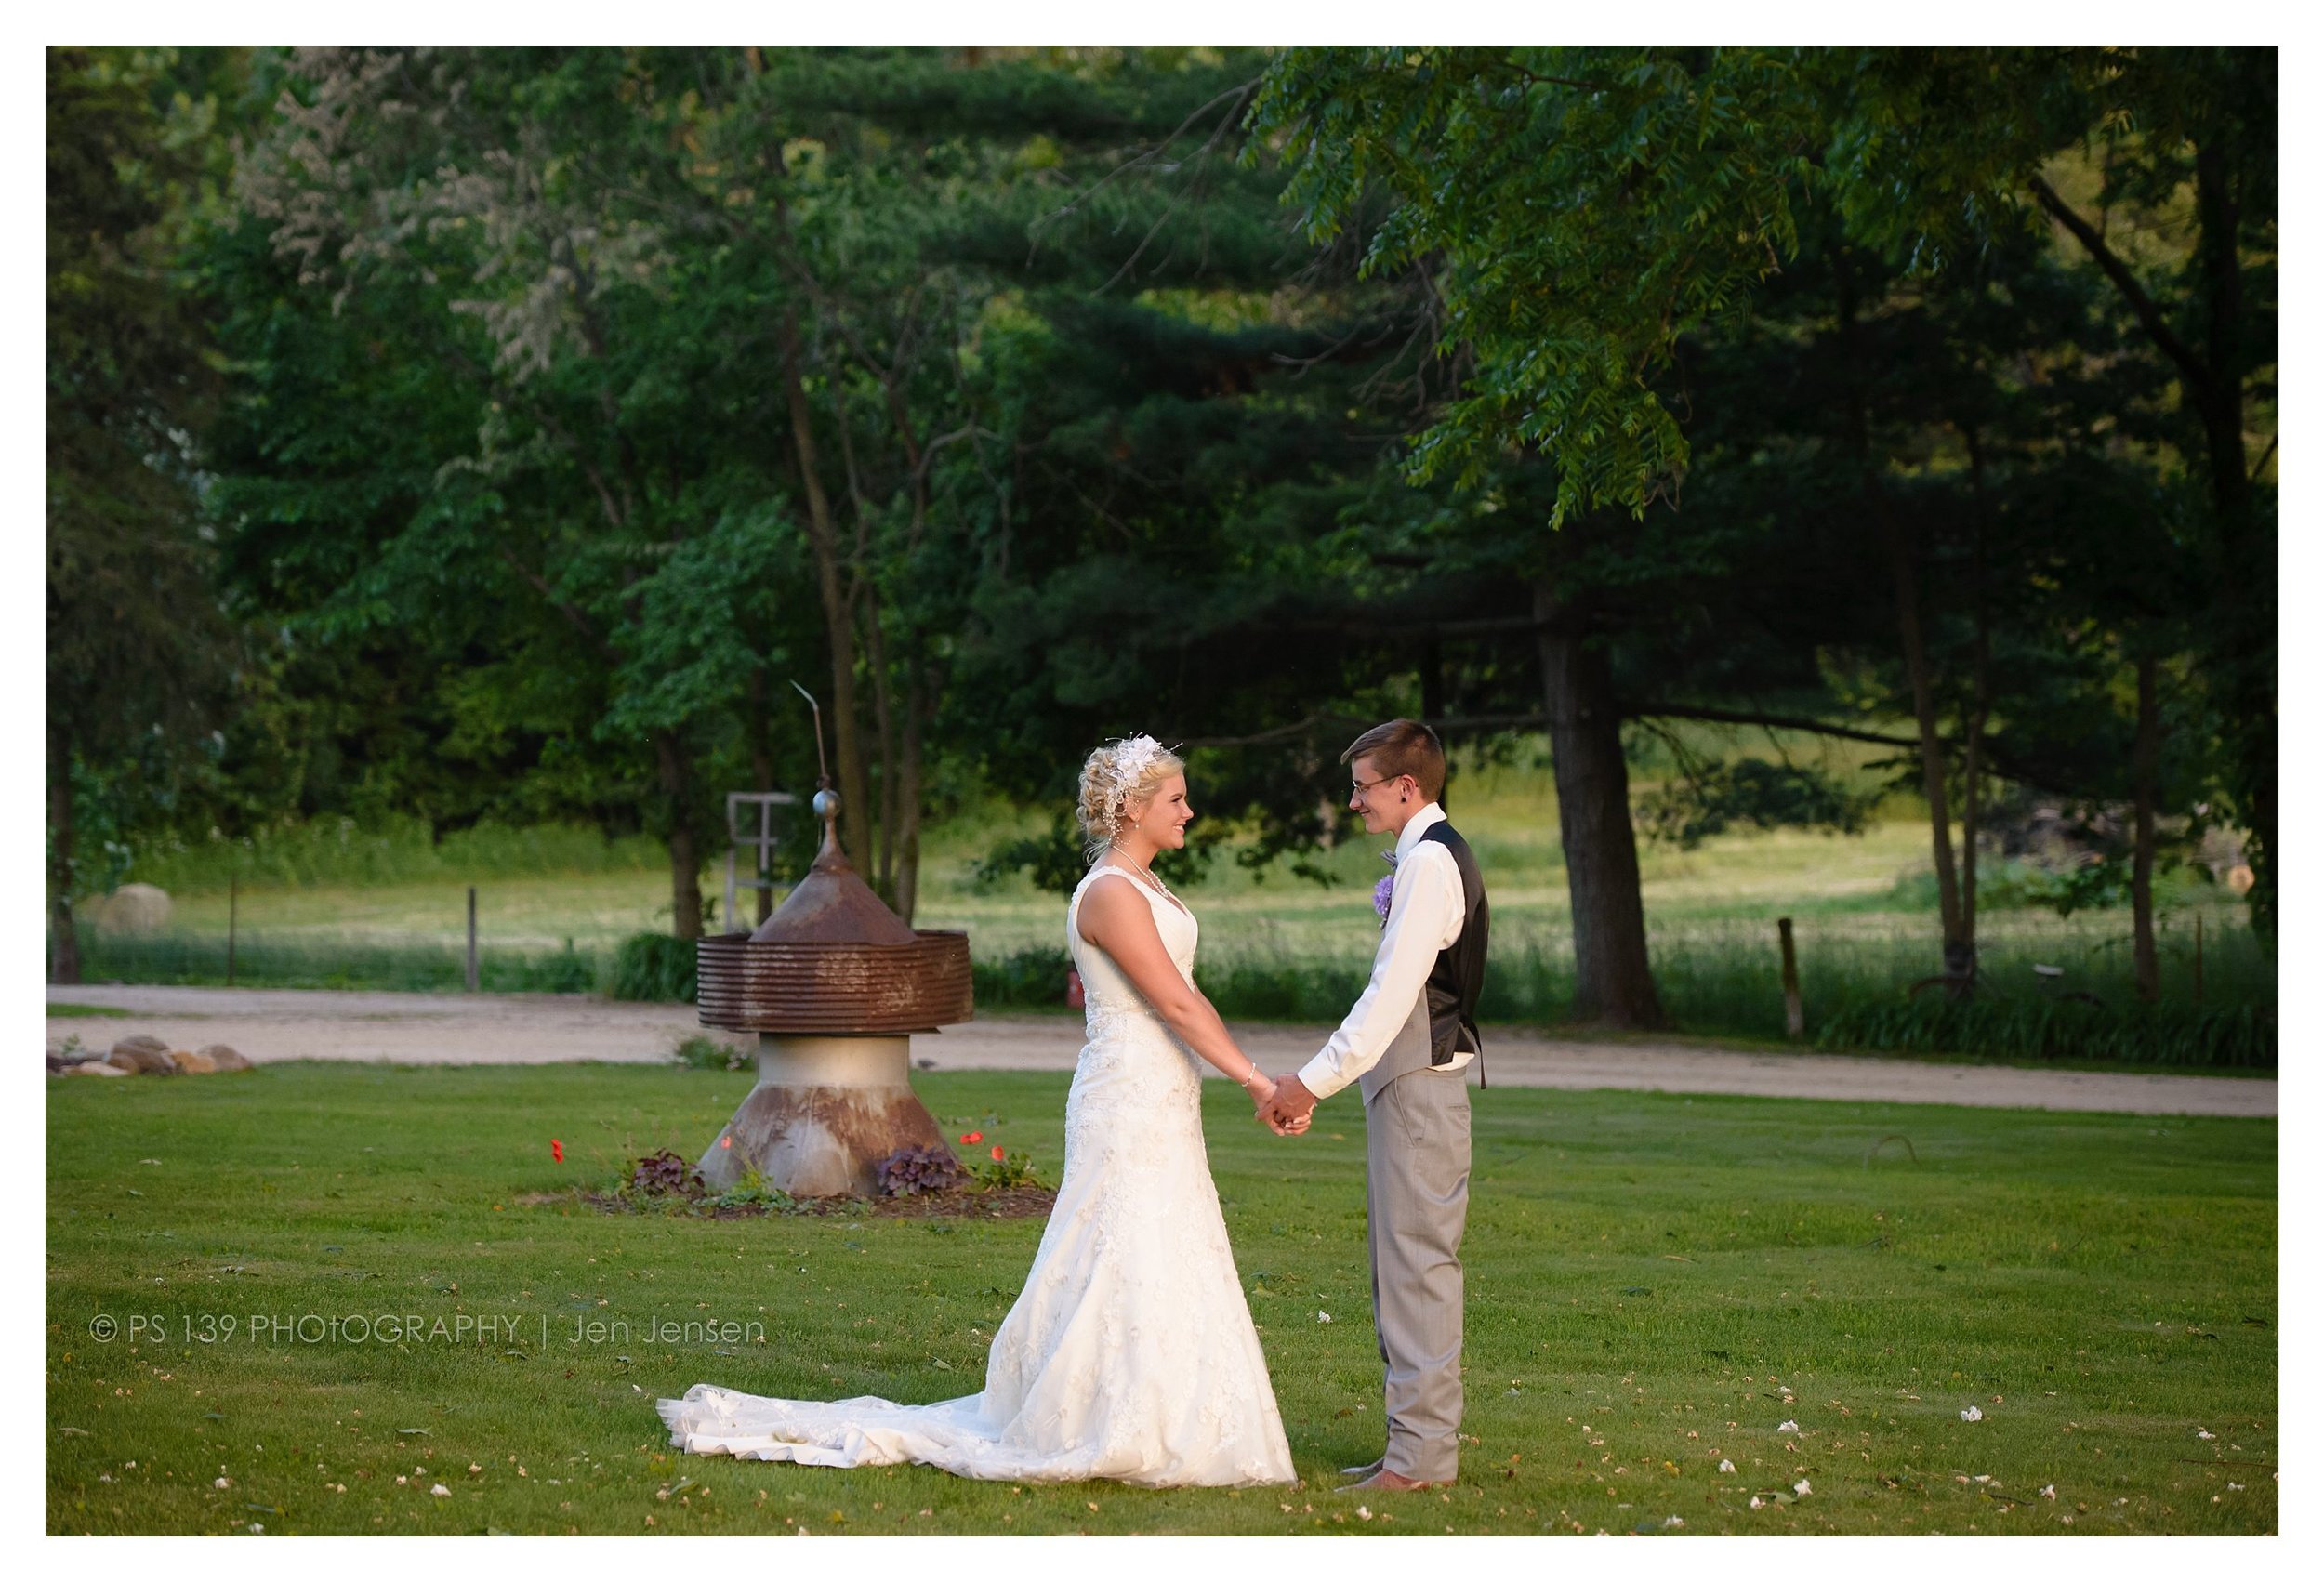 oregon Illinois oak lane farm wisconsin wedding photographer bayfield wi ps 139 photography jen jensen_0253.jpg